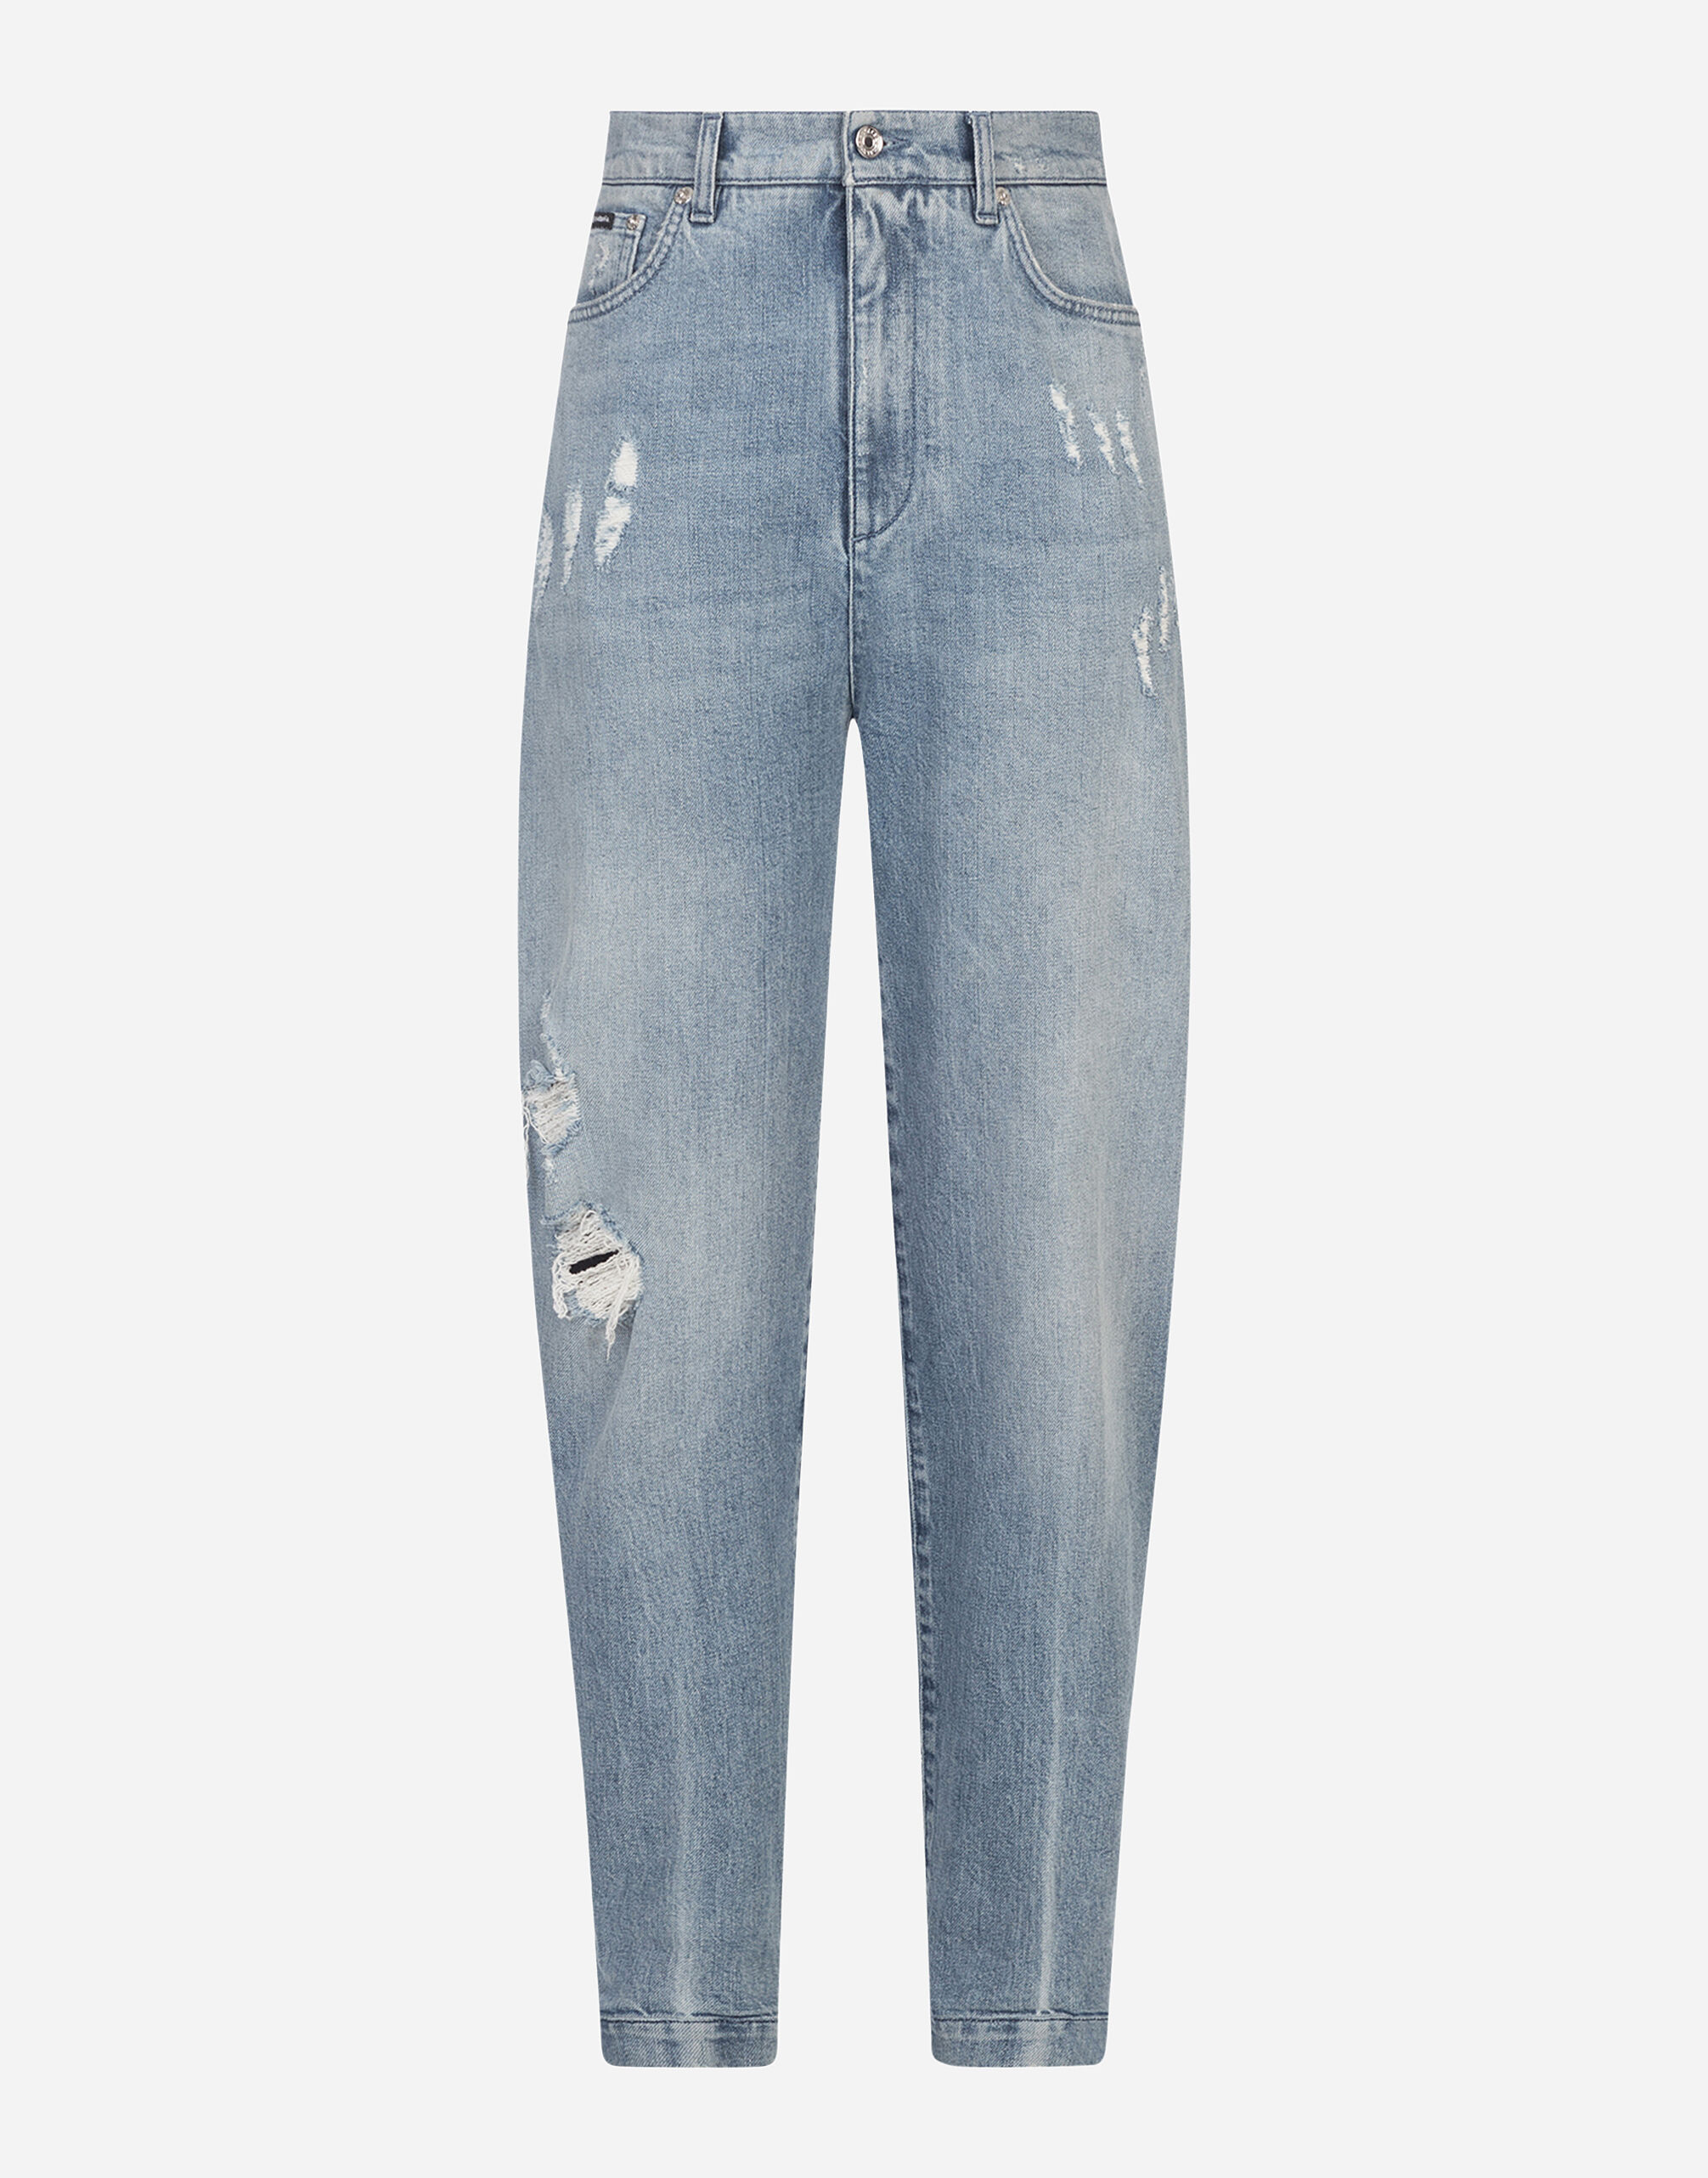 Dolce & Gabbana Boyfriend jeans in light blue denim with rips Multicolor FTAIADG8EZ8